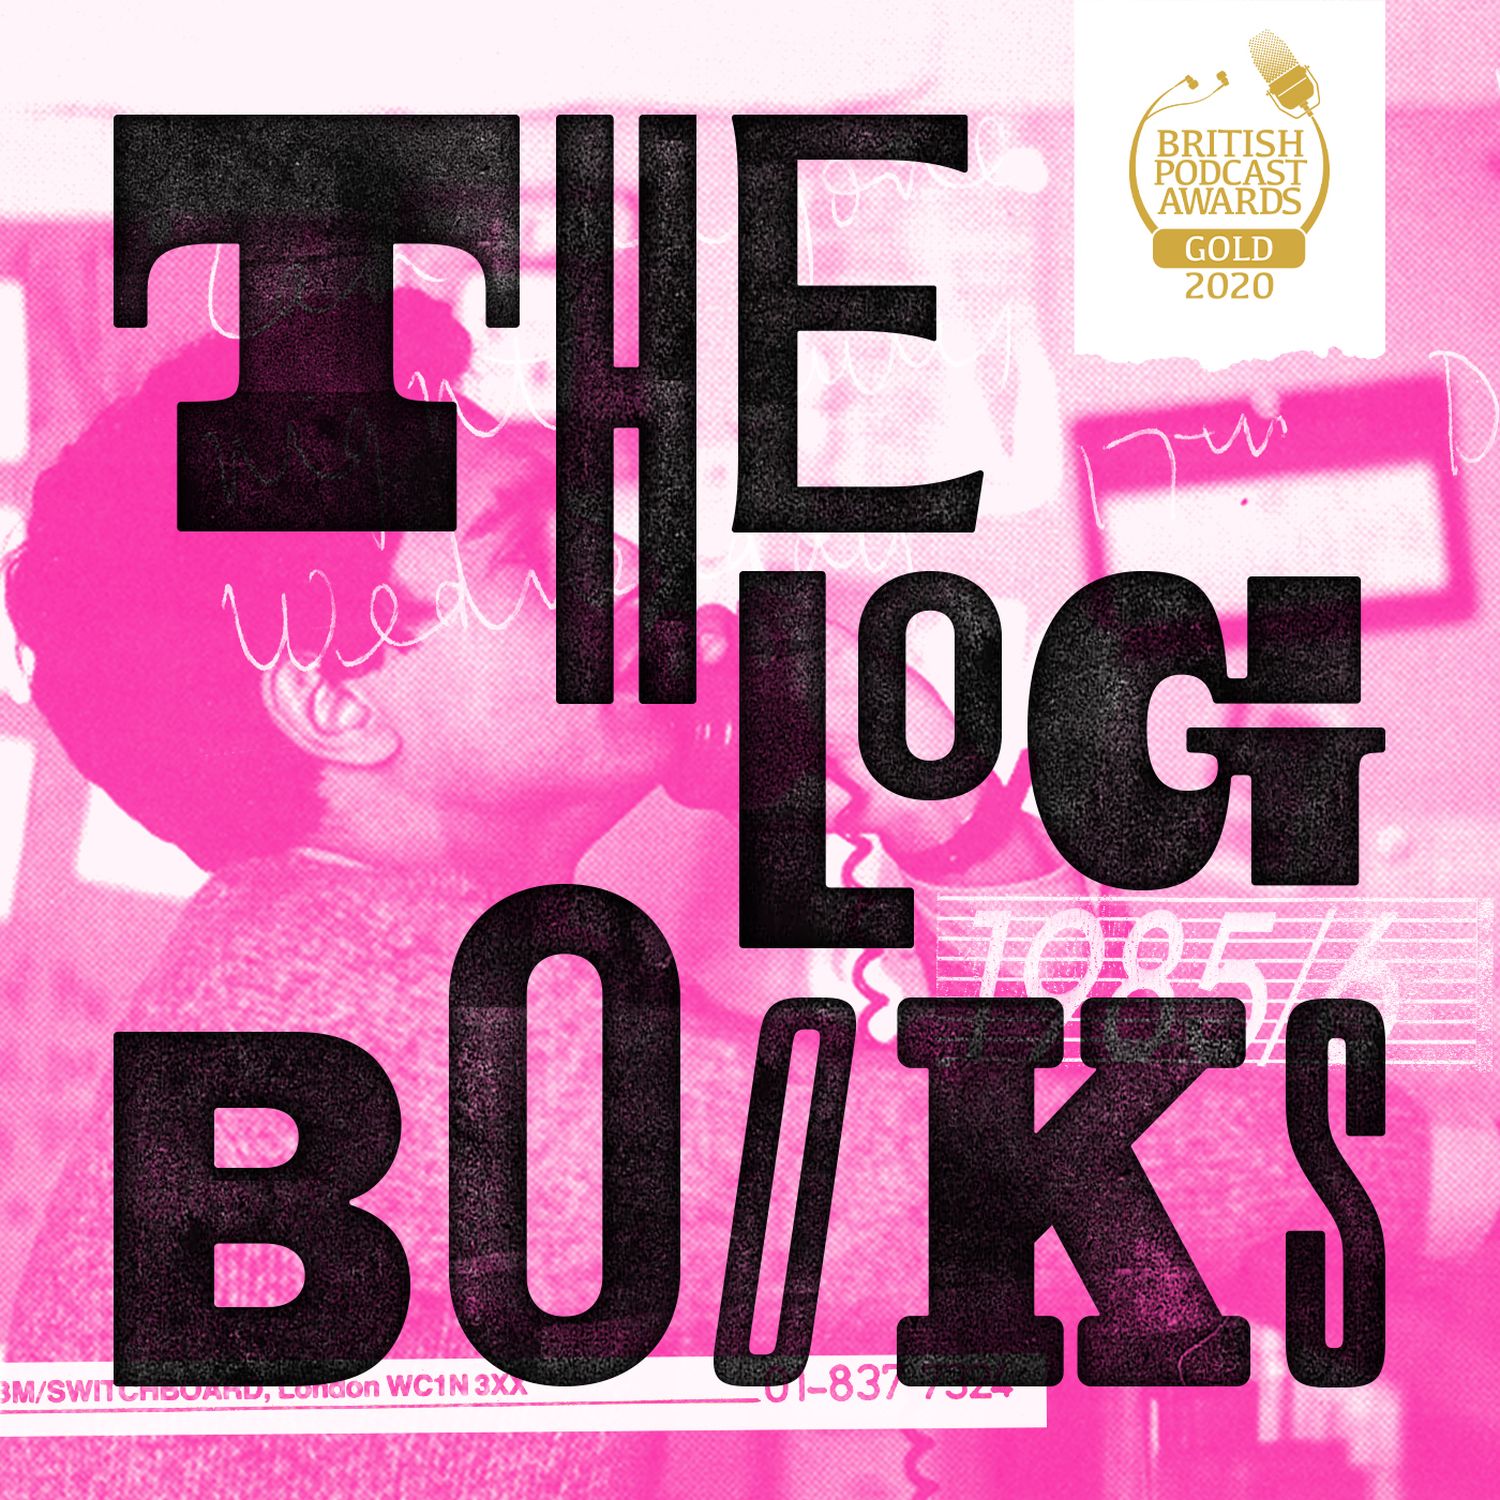 The Log Books podcast show image